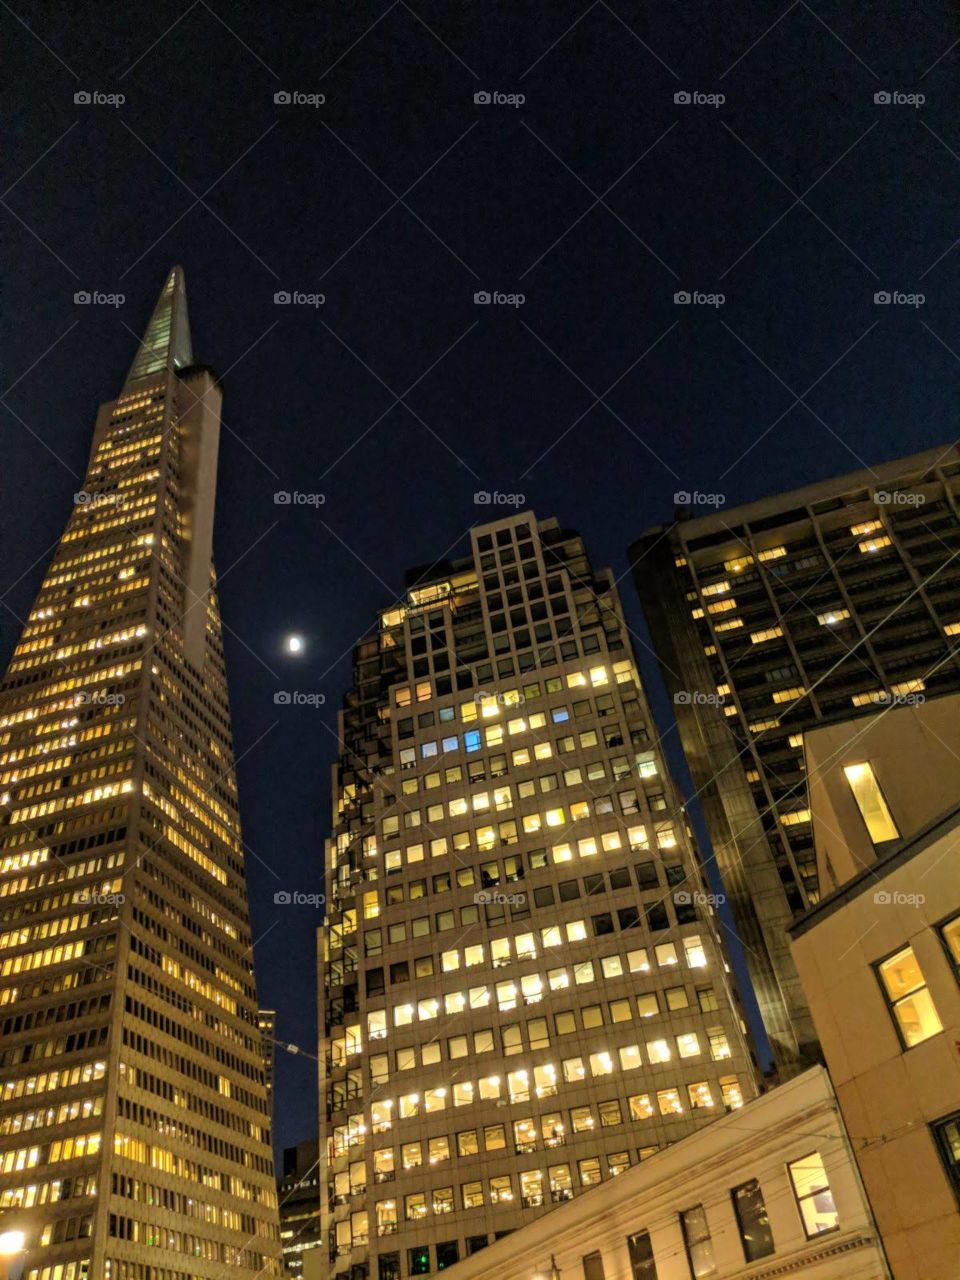 San Francisco, California. Downtown neat Transamerica building or pyramid. Silicon Valley